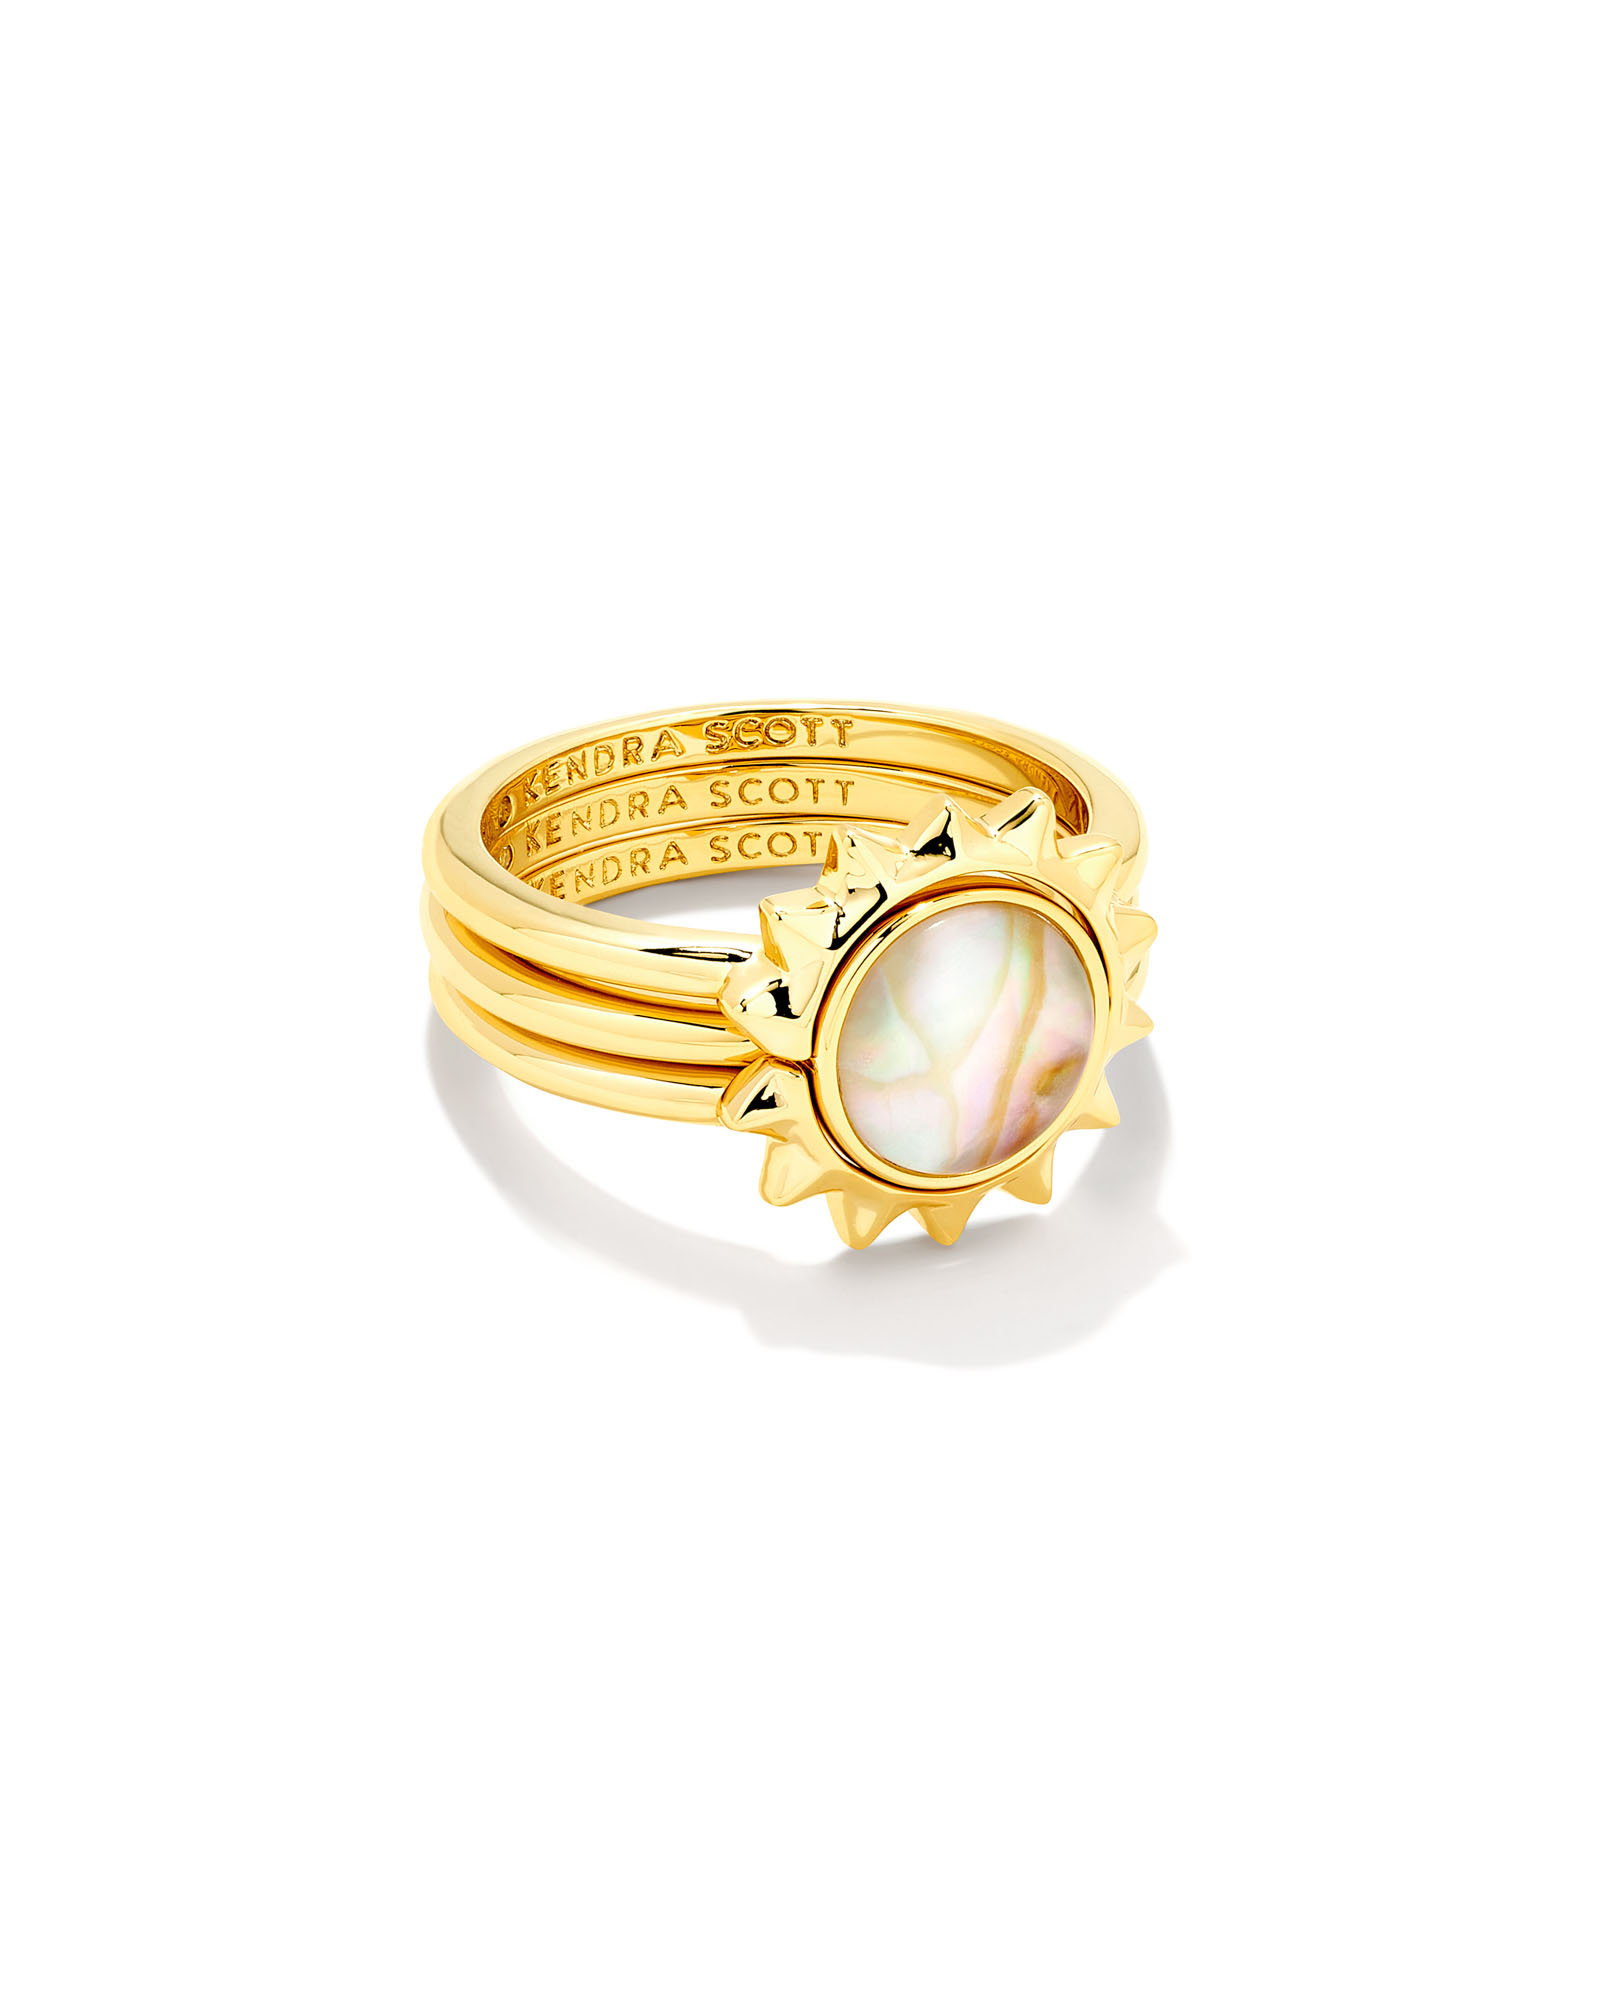 Nicolette 14k White Gold Band Ring in White Diamond | Kendra Scott